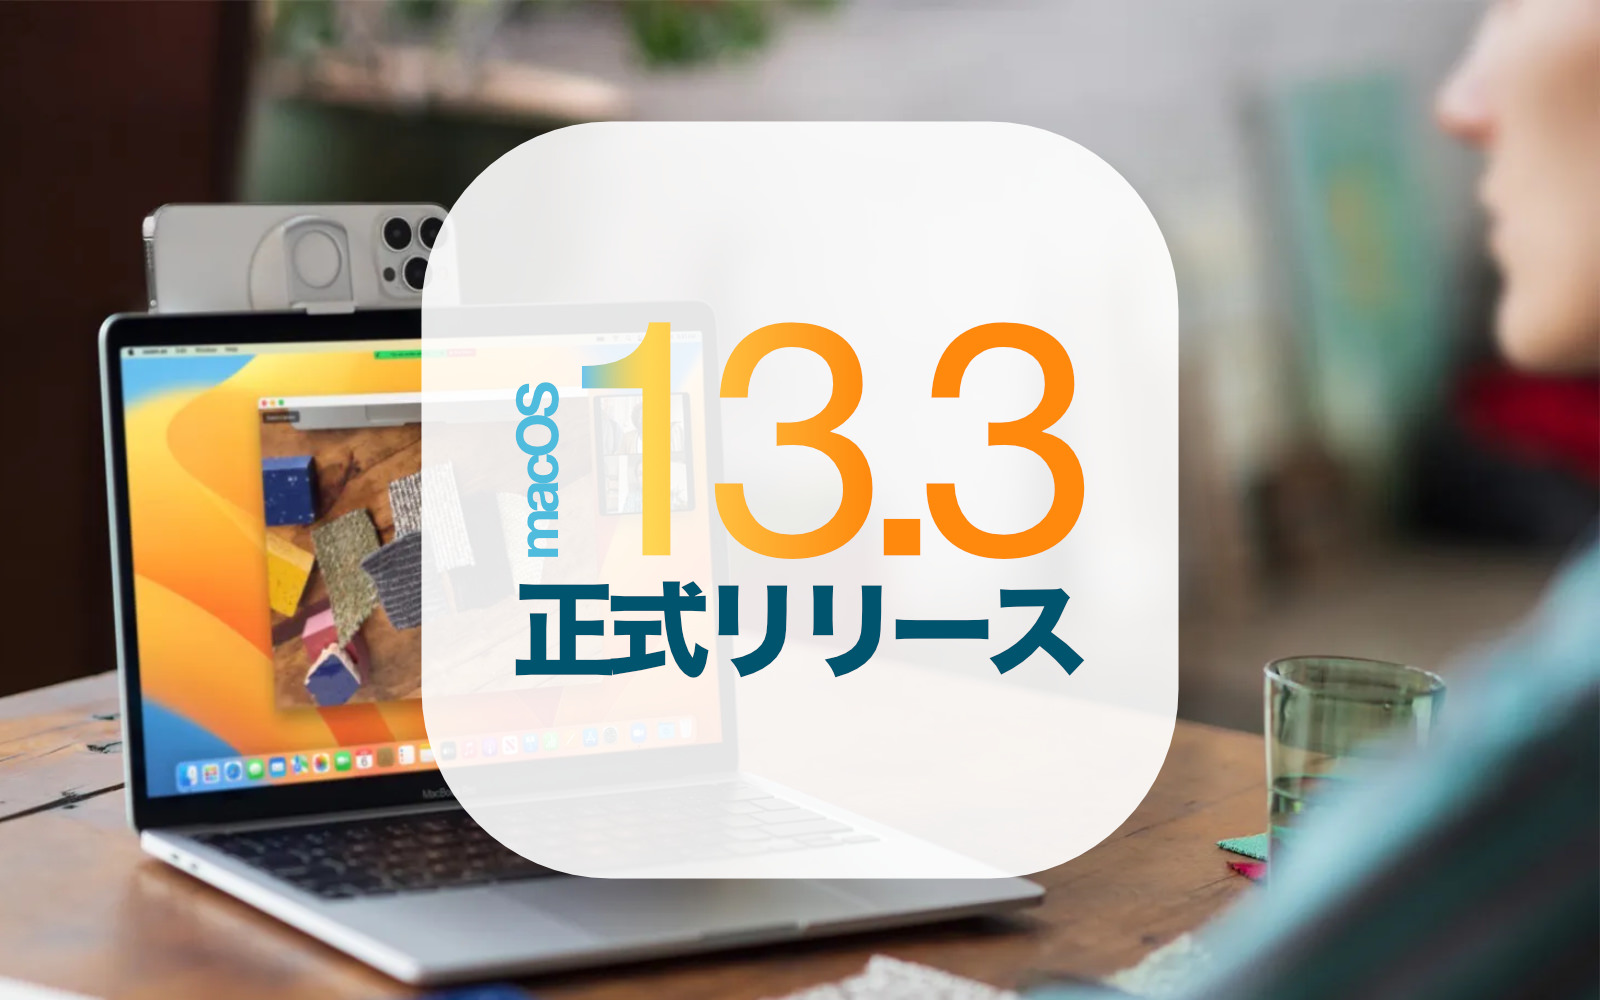 MacOS13 3 Ventura official release